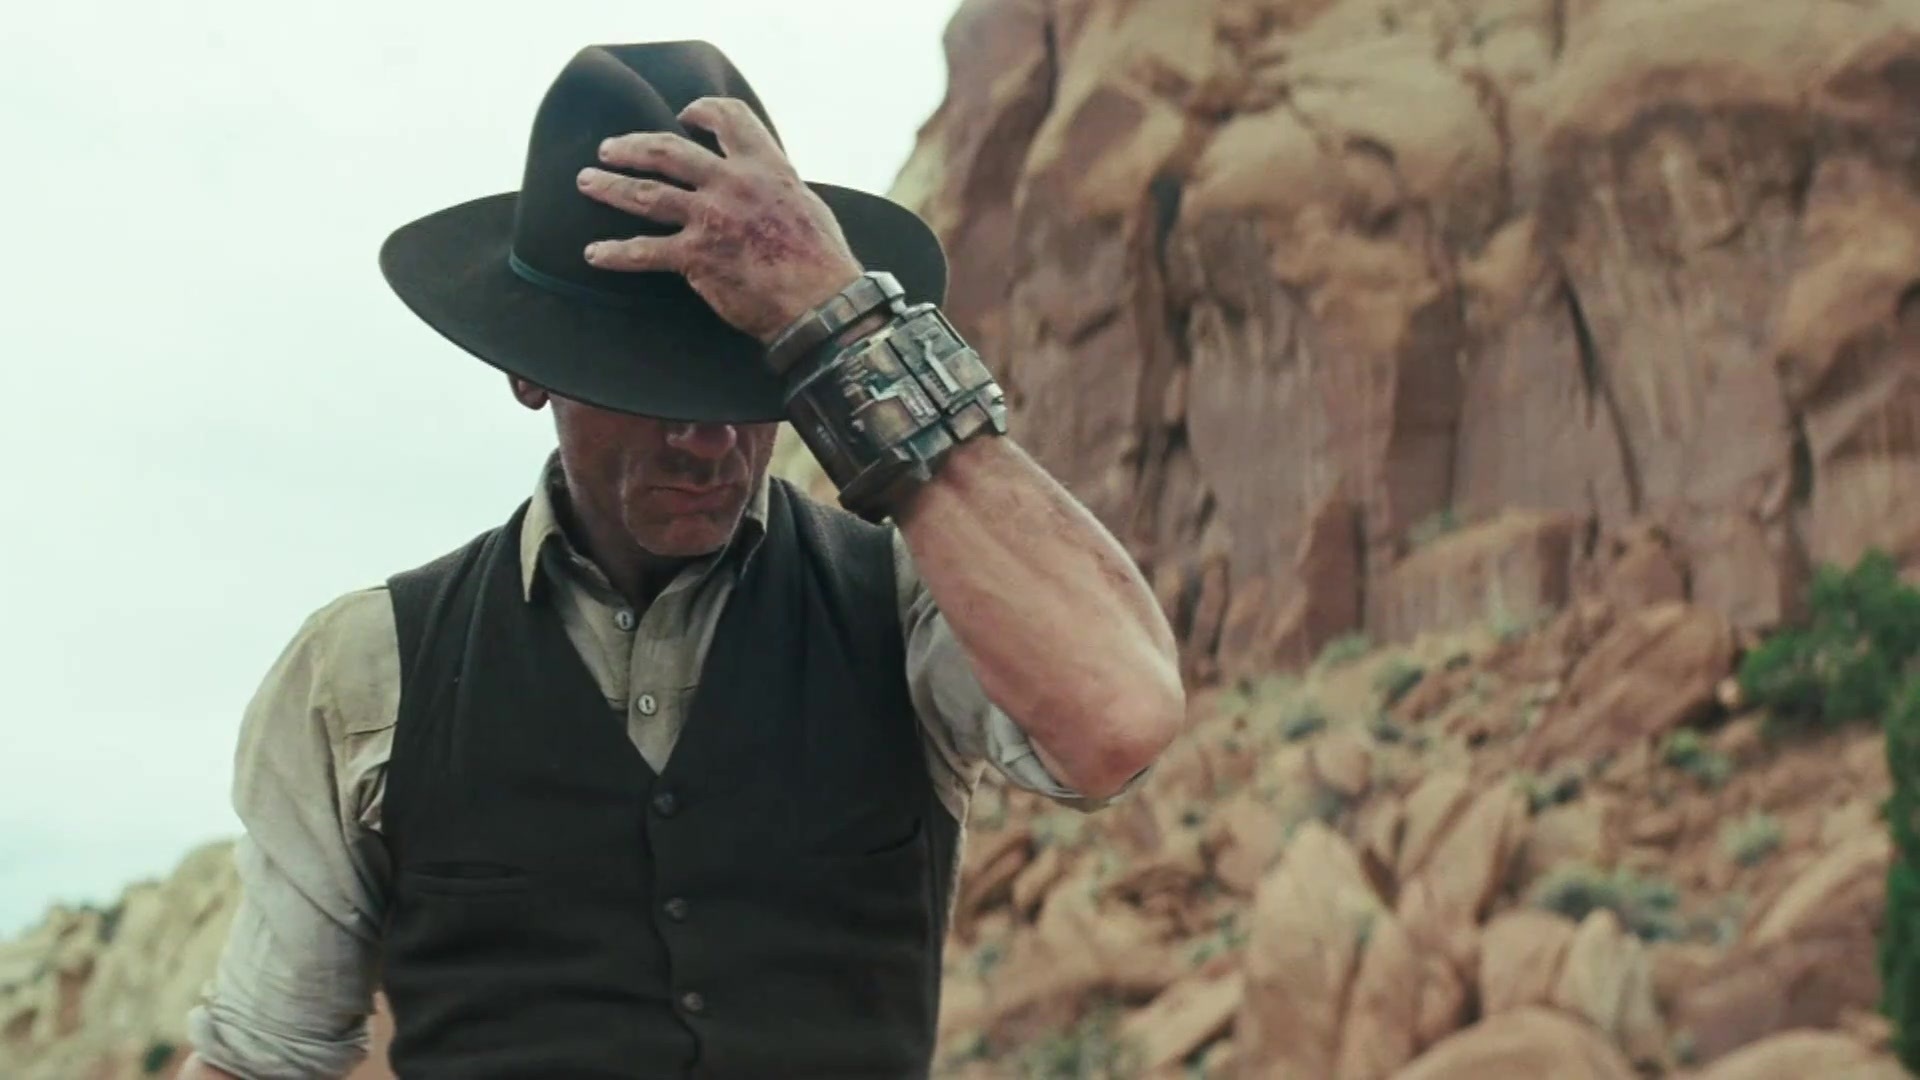 'Cowboys & Aliens' Official Trailer #1 - Cowboys & Aliens Image ...